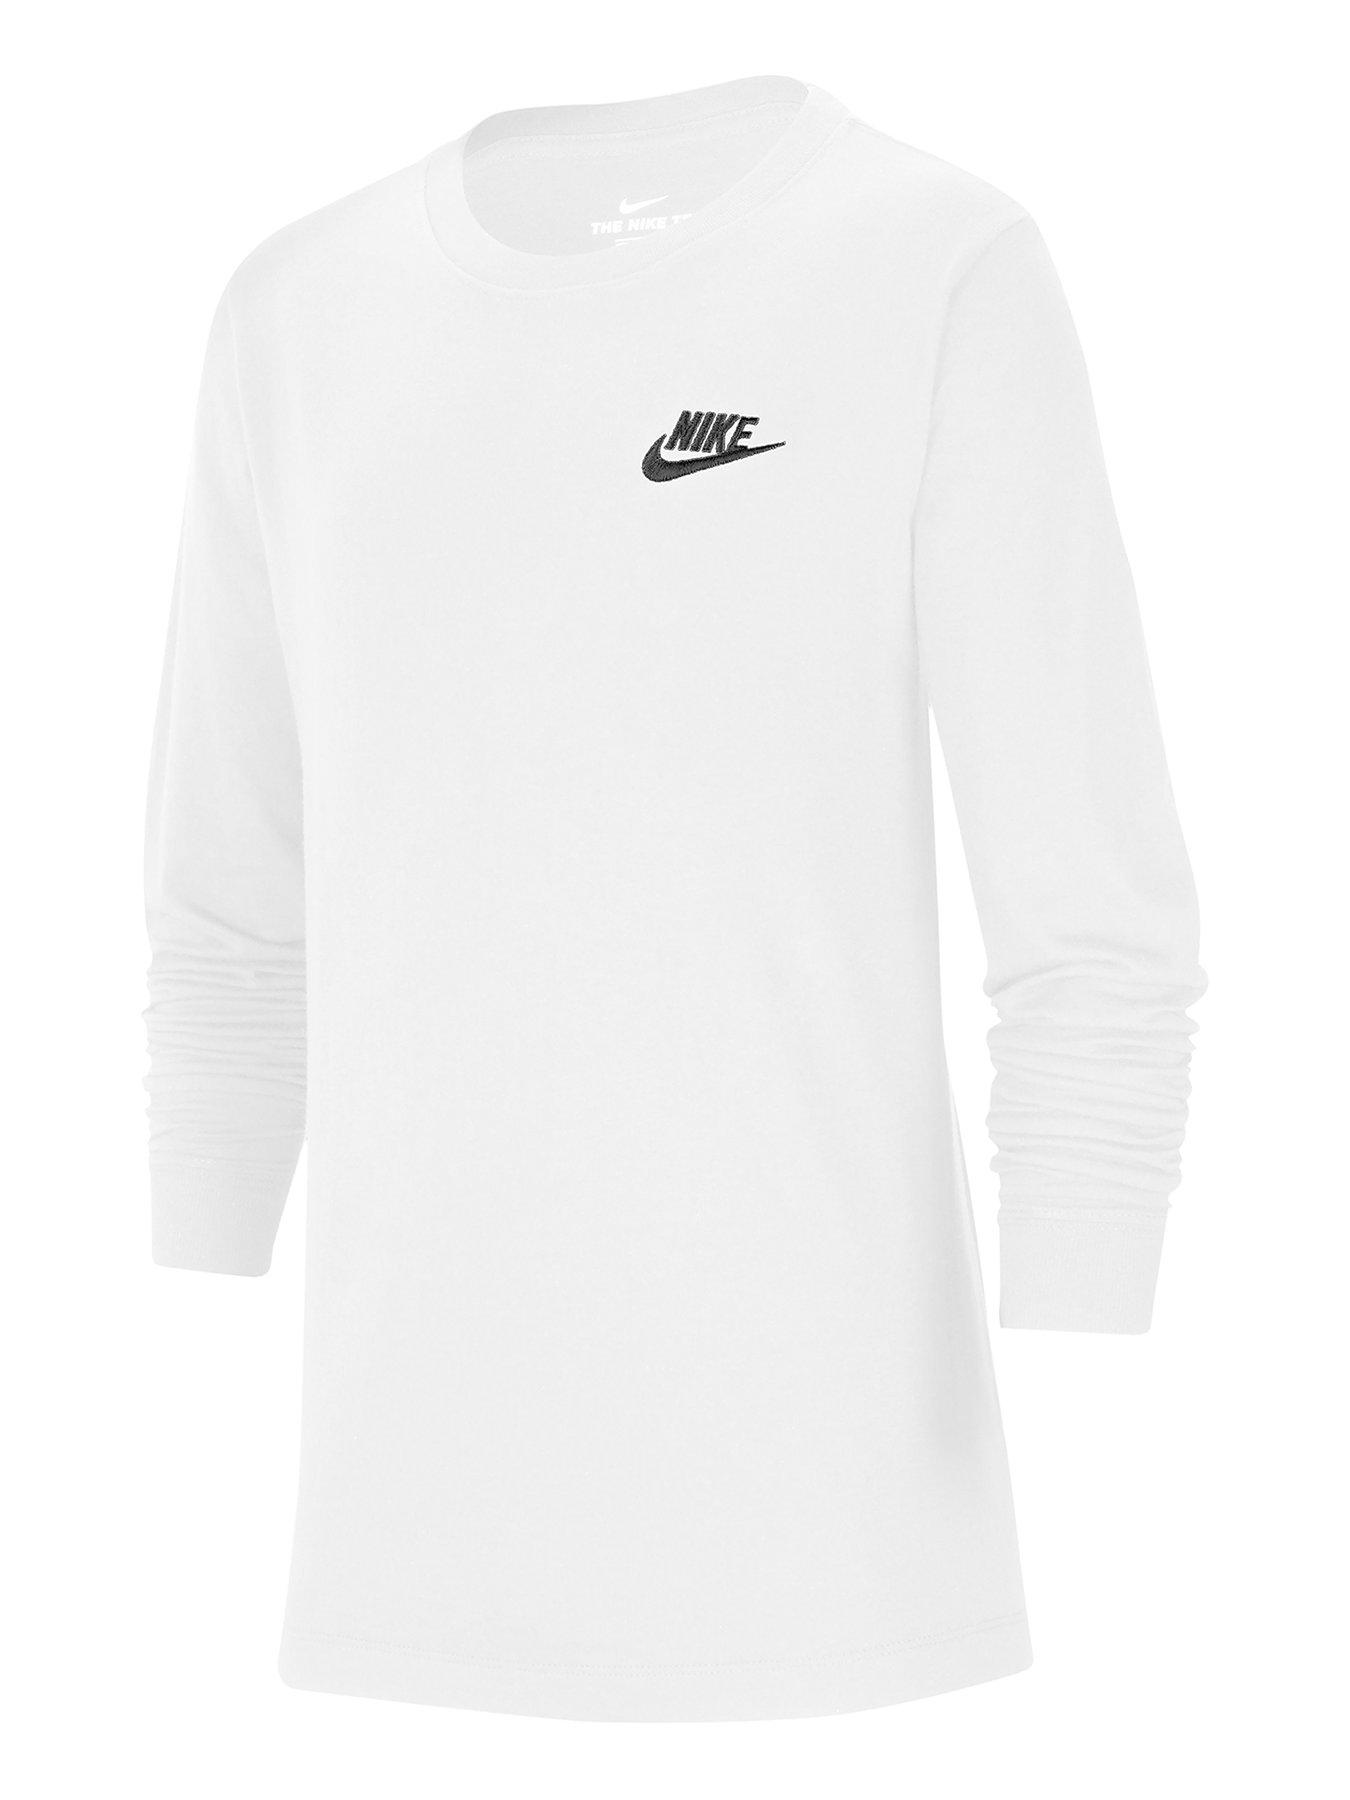 Nike Older Boys Futura T-shirt - White/Black | very.co.uk